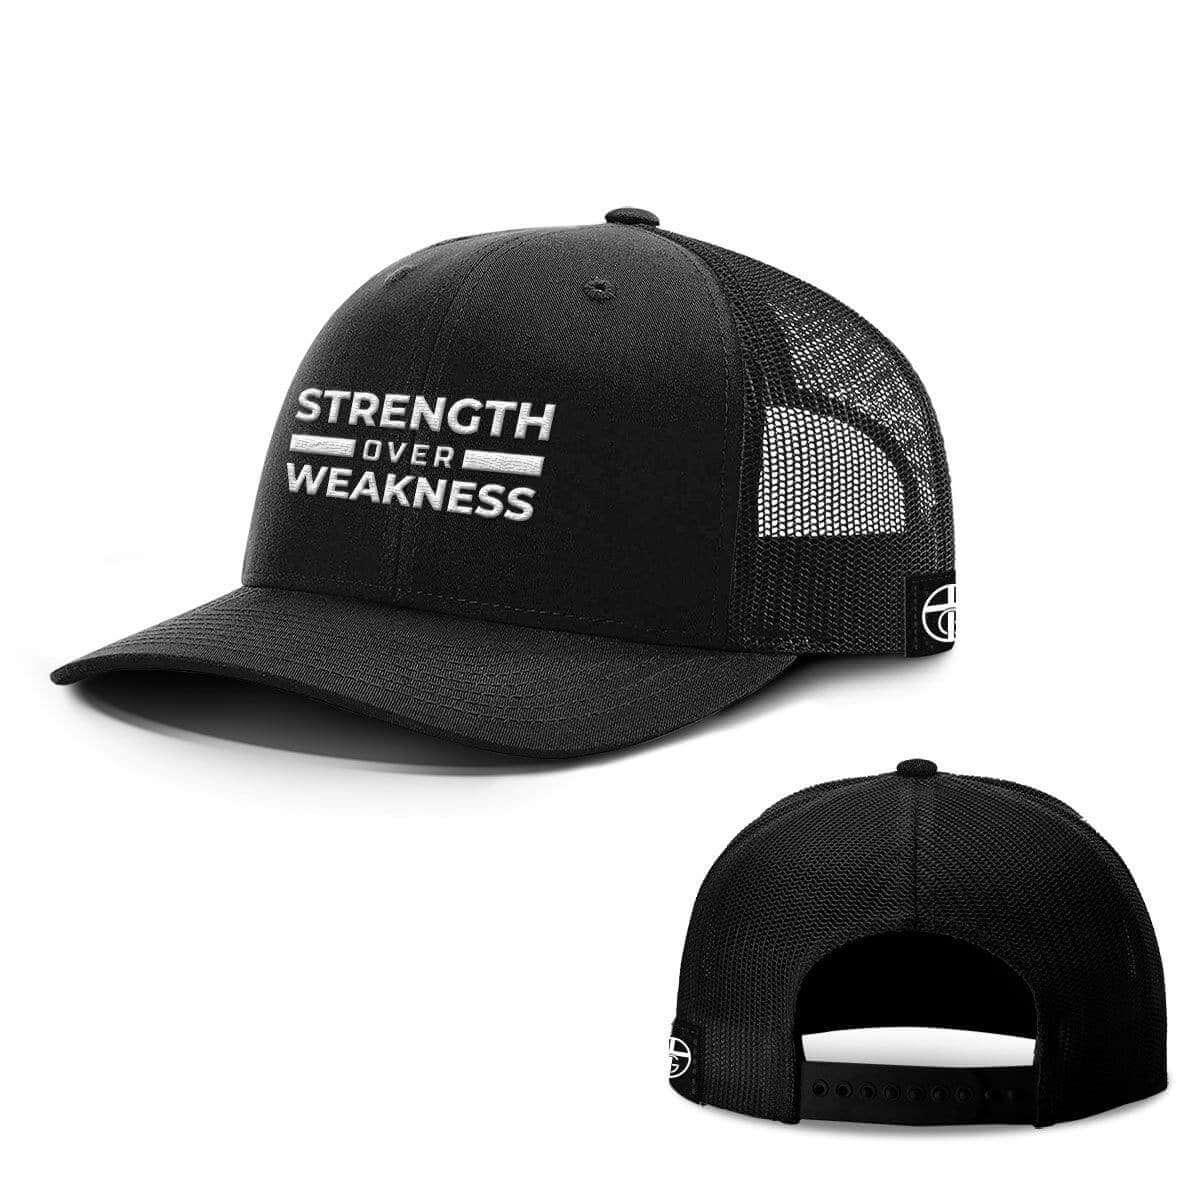 Strength Over Weakness Hats